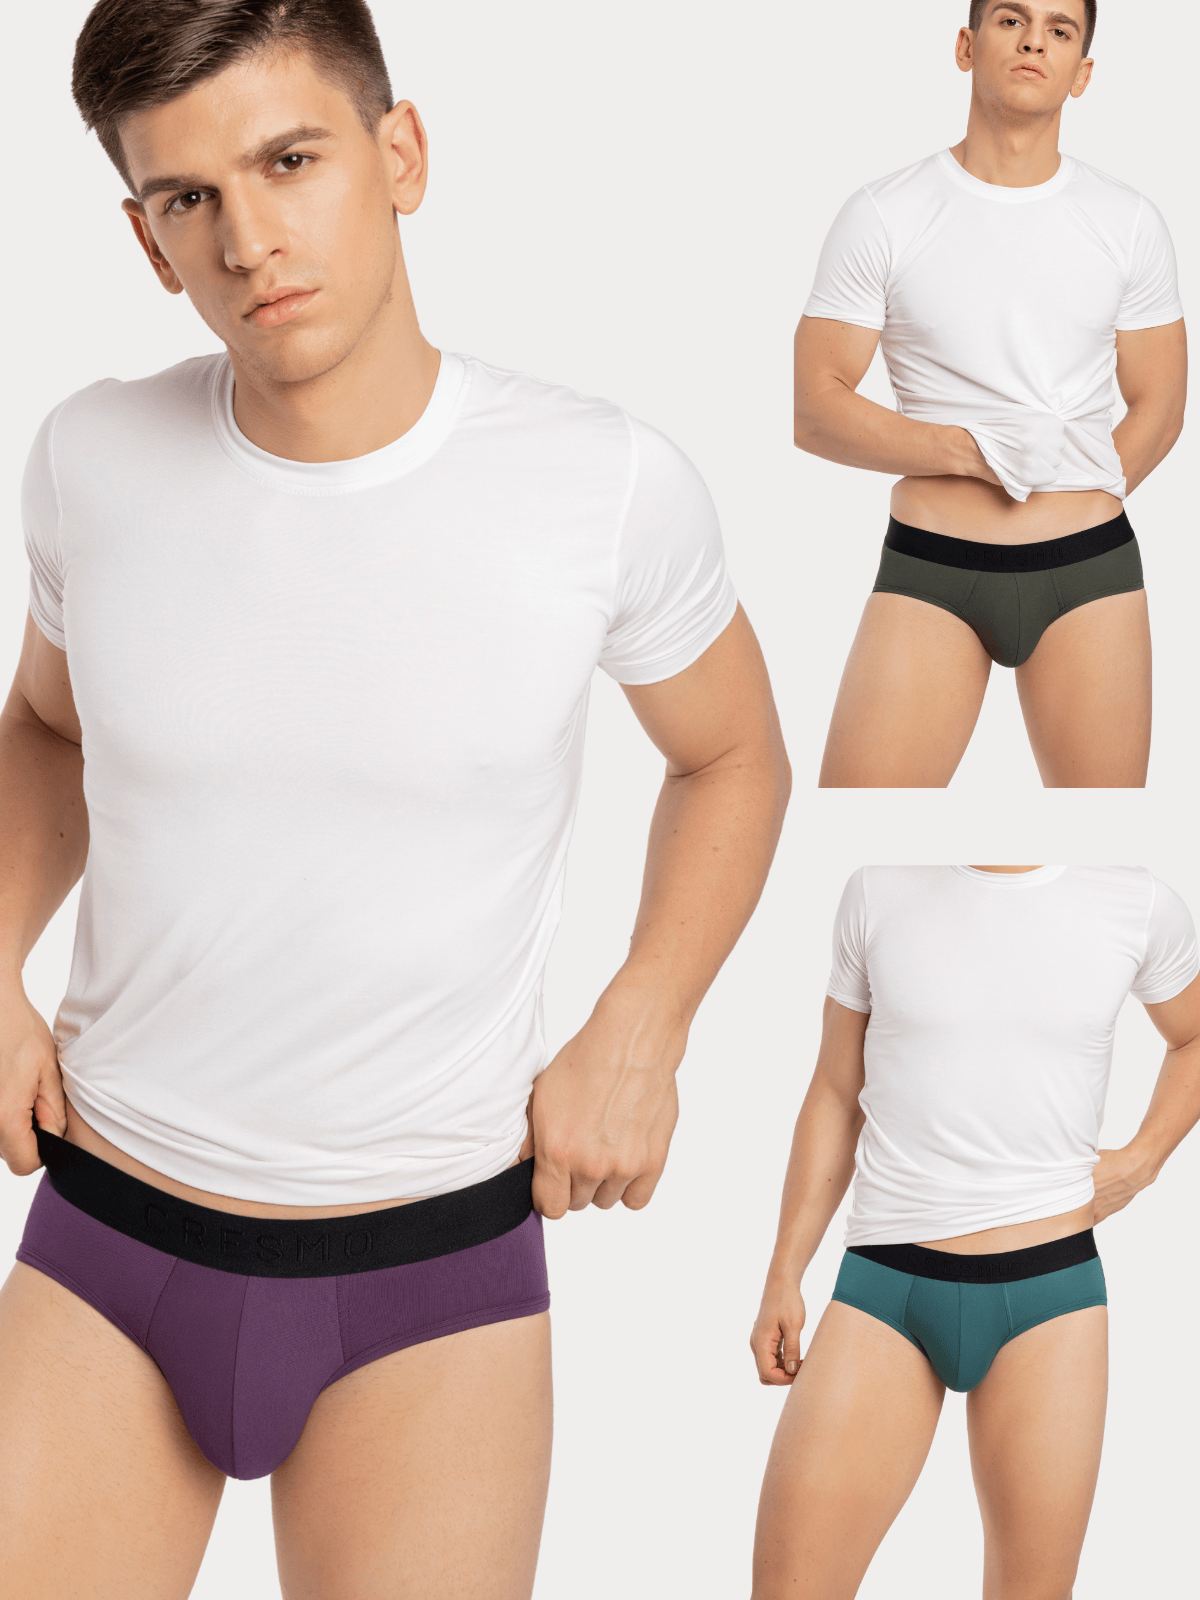 CRESMO | CRESMO Men's Luxury Anti-Microbial Micro Modal Underwear Breathable Ultra Soft Comfort Lightweight Brief 0